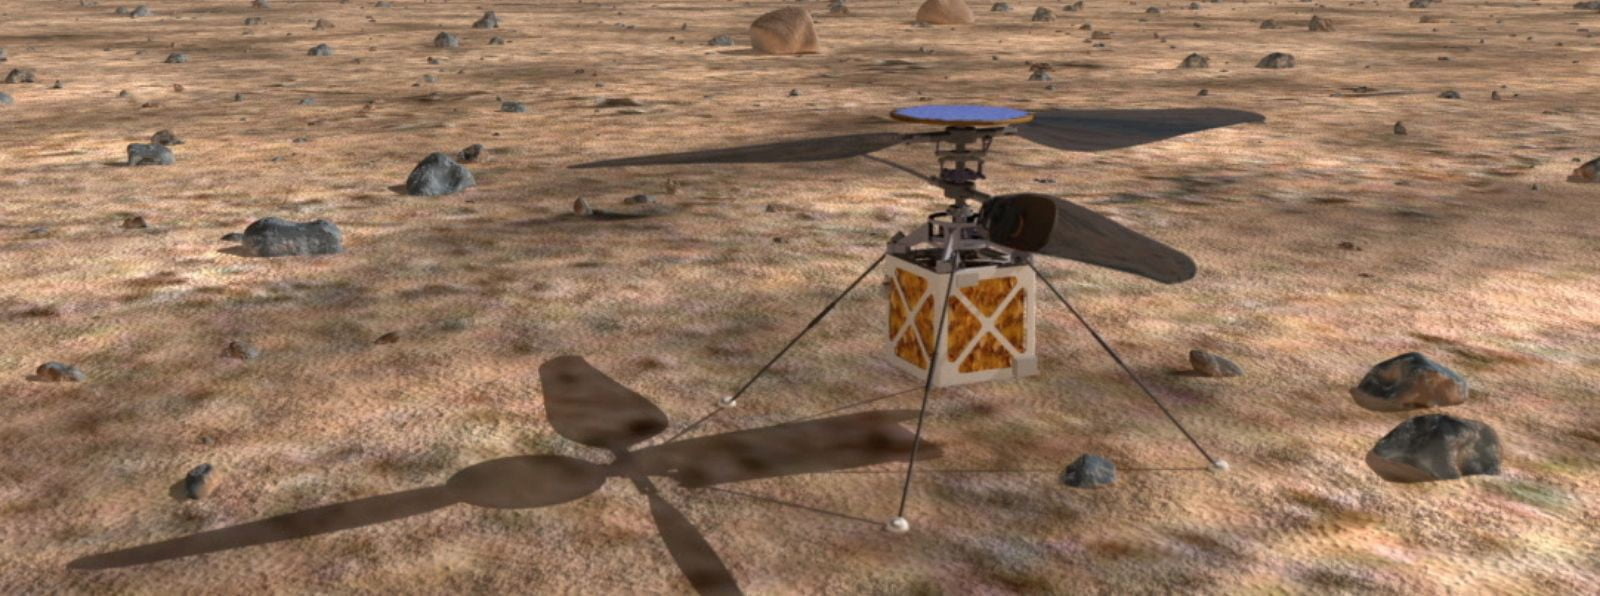 MARS HELICOPTER.0.0 e1424726579201 ناسا تطور مروحية لإرسالها إلى المريخ مجلة نقطة العلمية